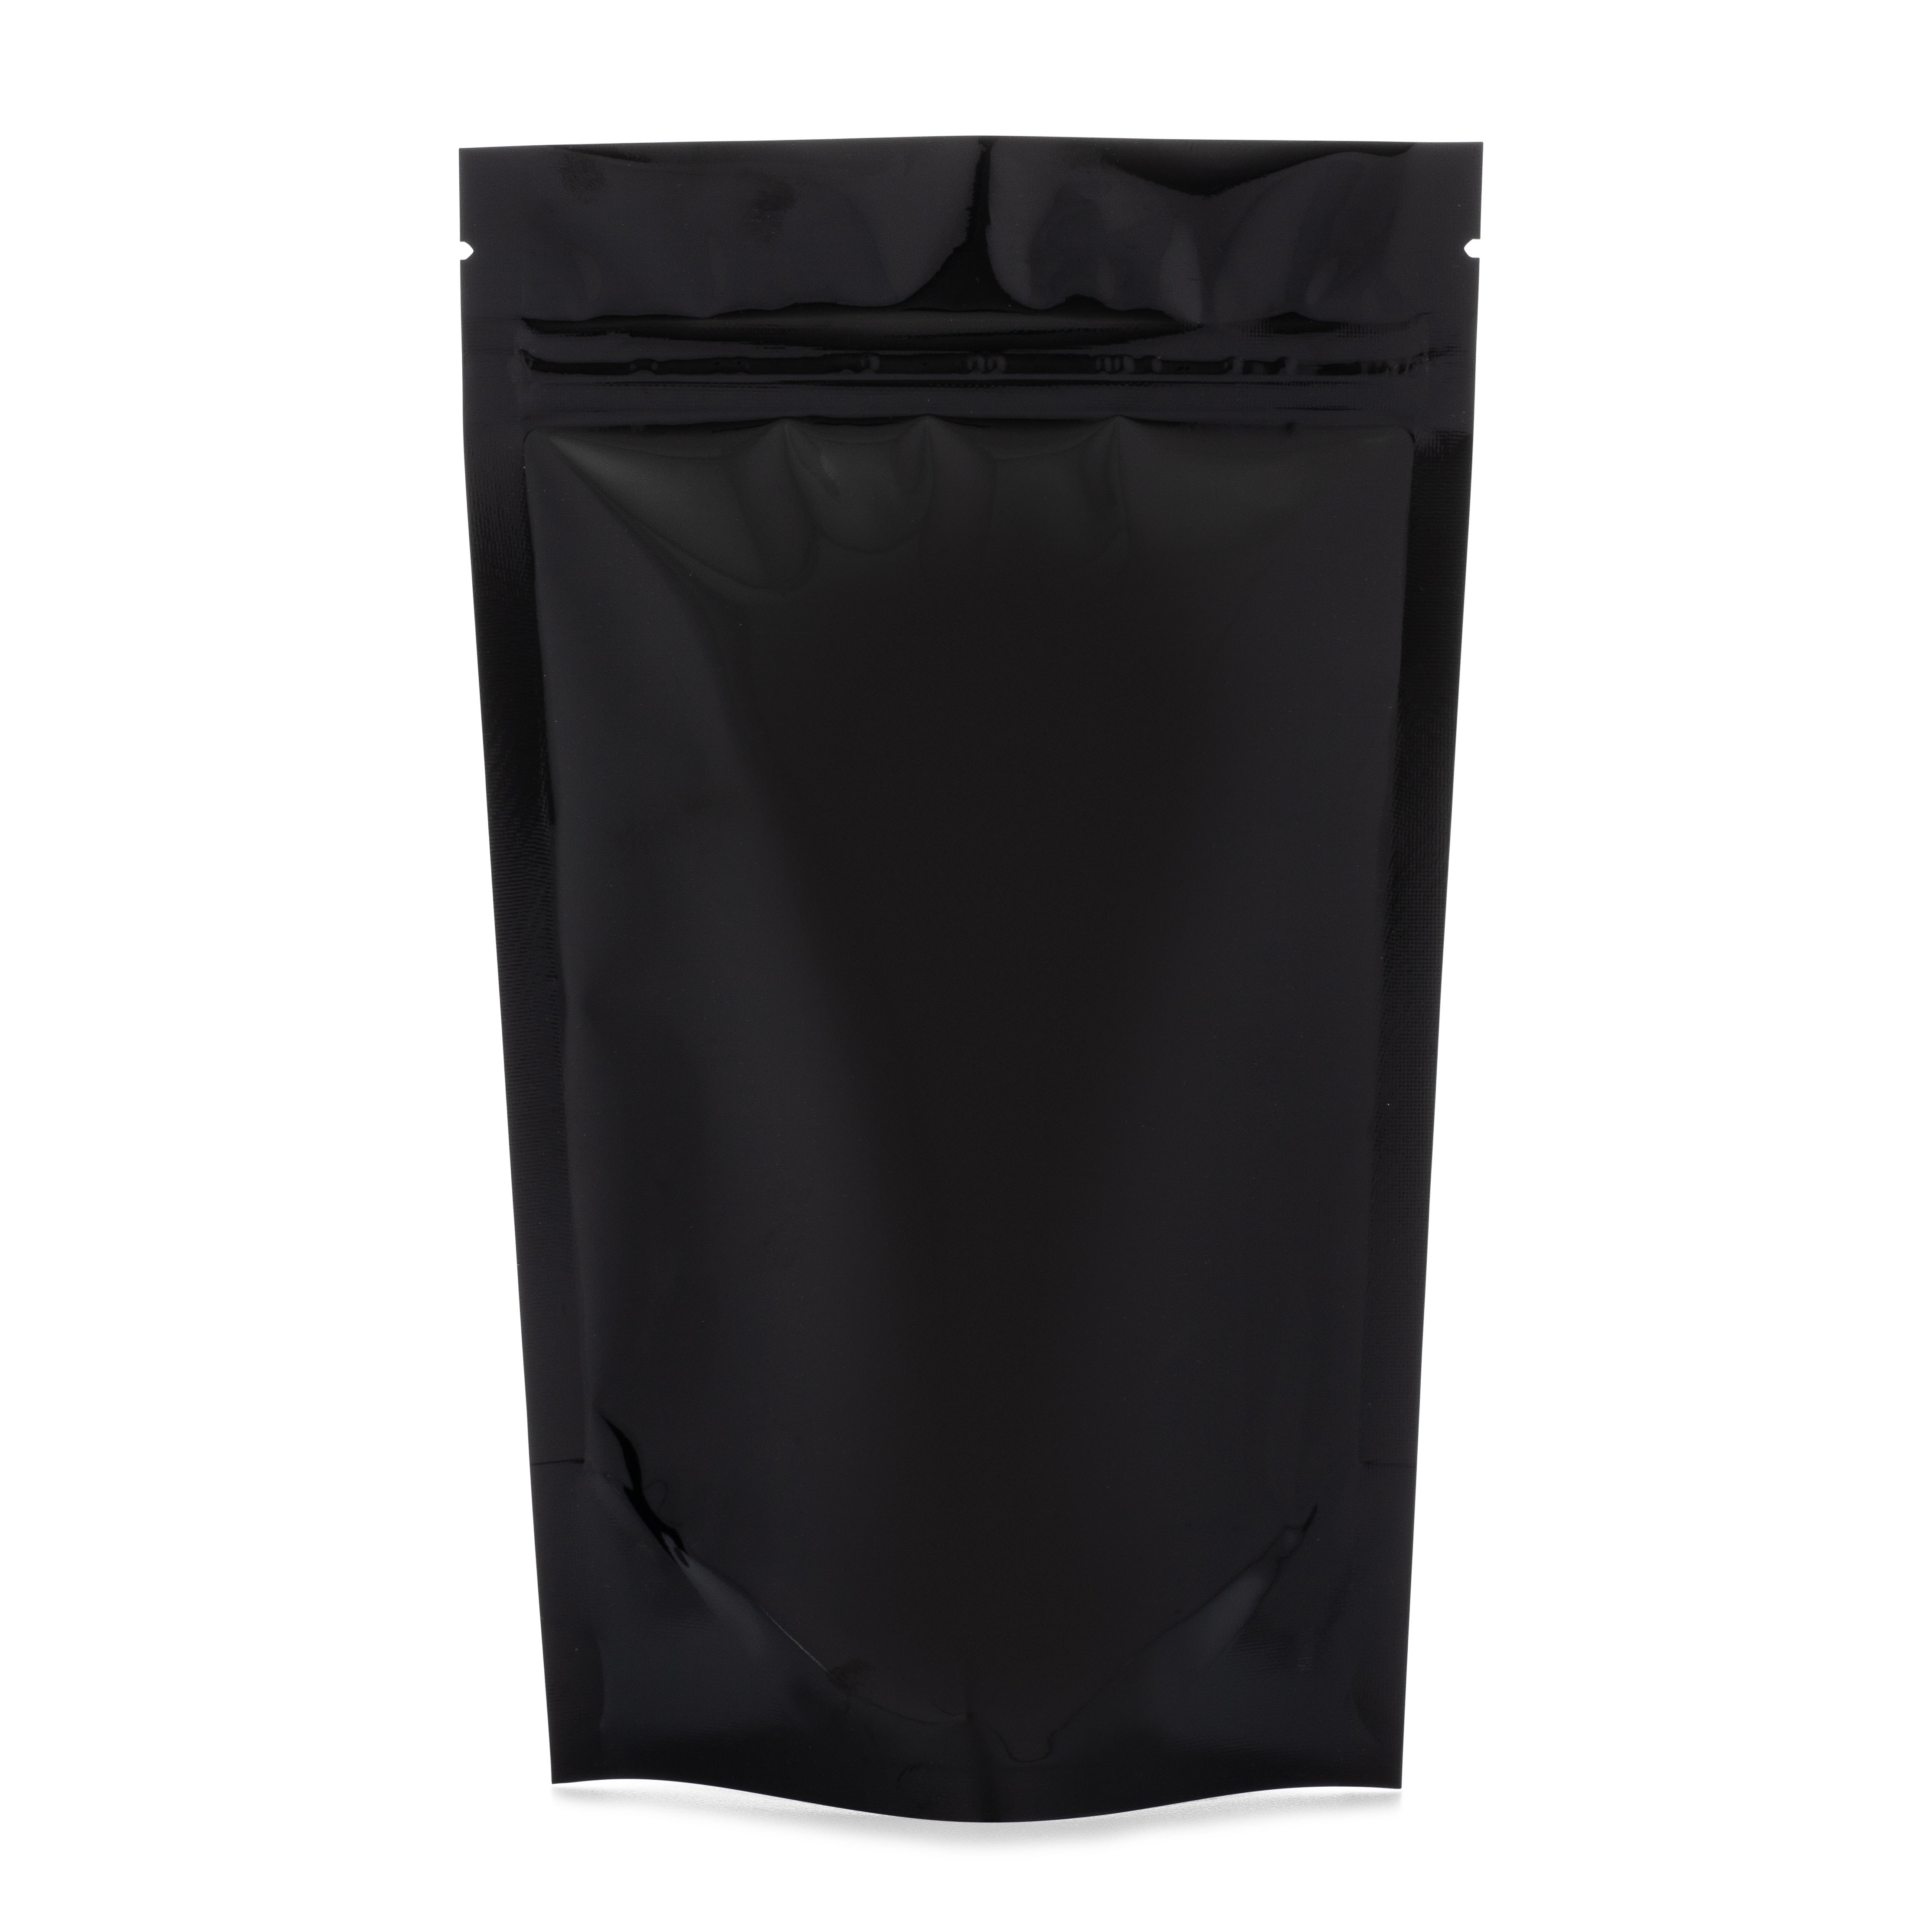 1/2oz Matte Black Child-Resistant Mylar Bags (1000 Qty